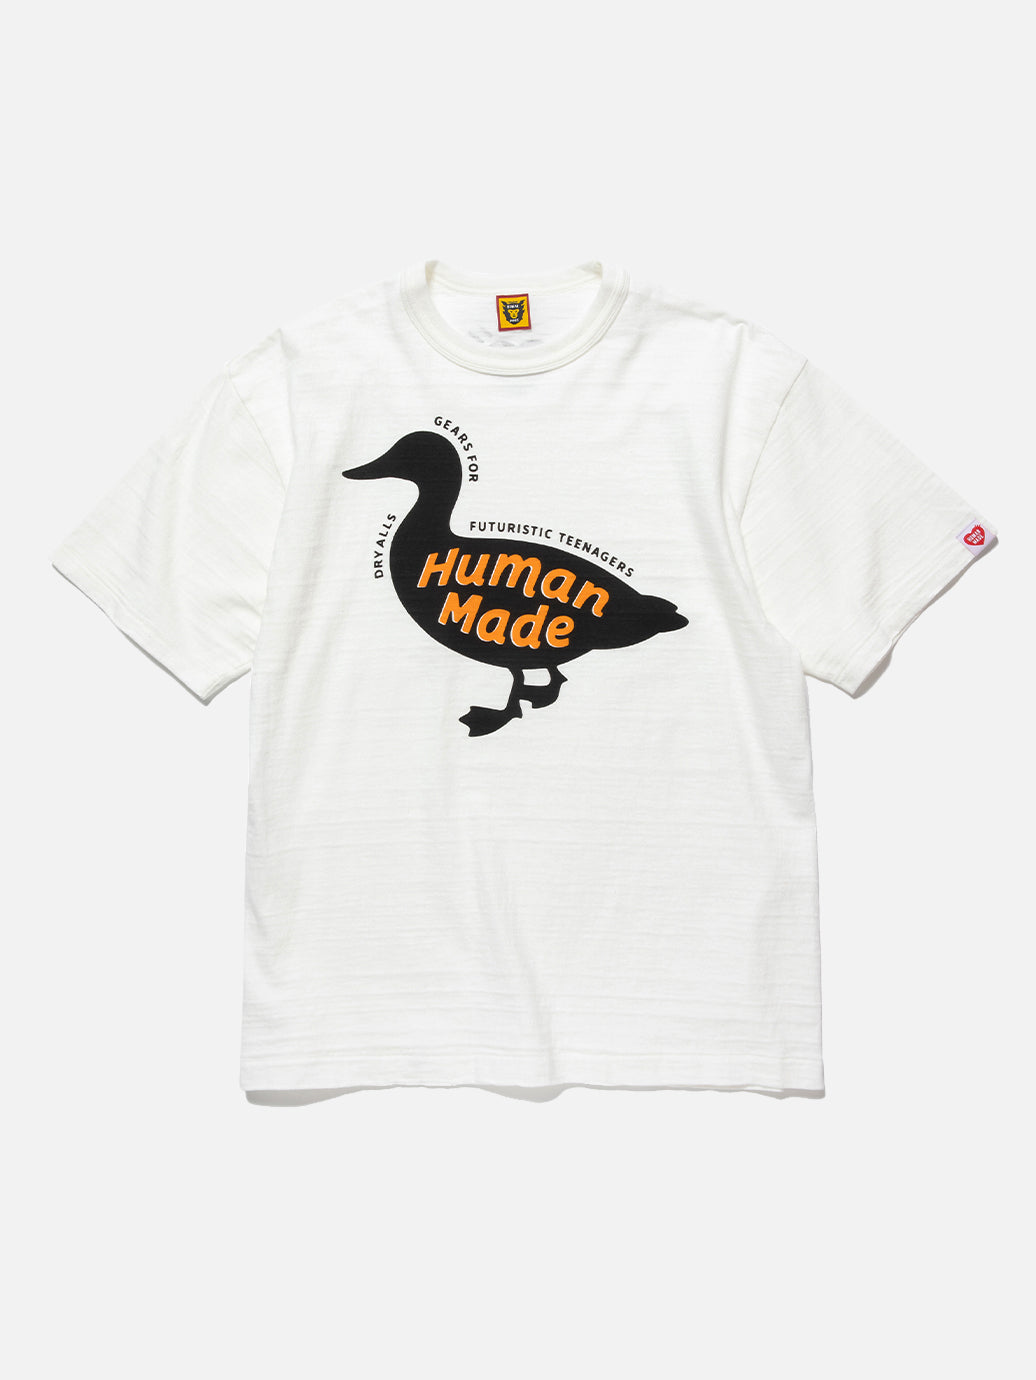 HUMAN MADE Graphic T-Shirt #2 "White"2XL